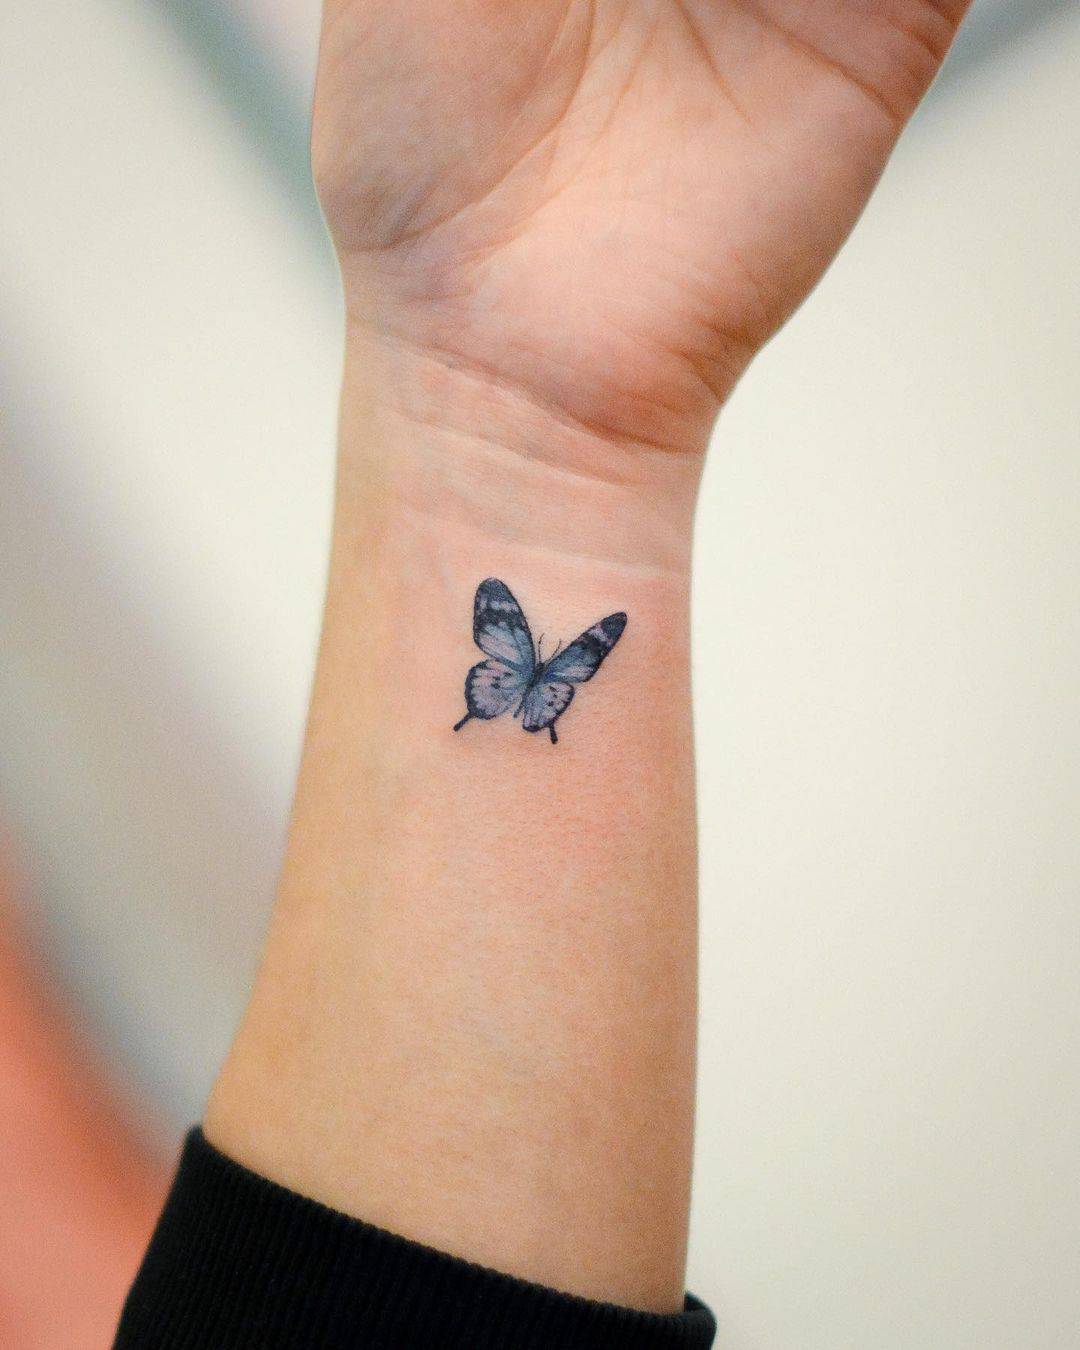 Butterfly on wrist tattoo by tattooist jason